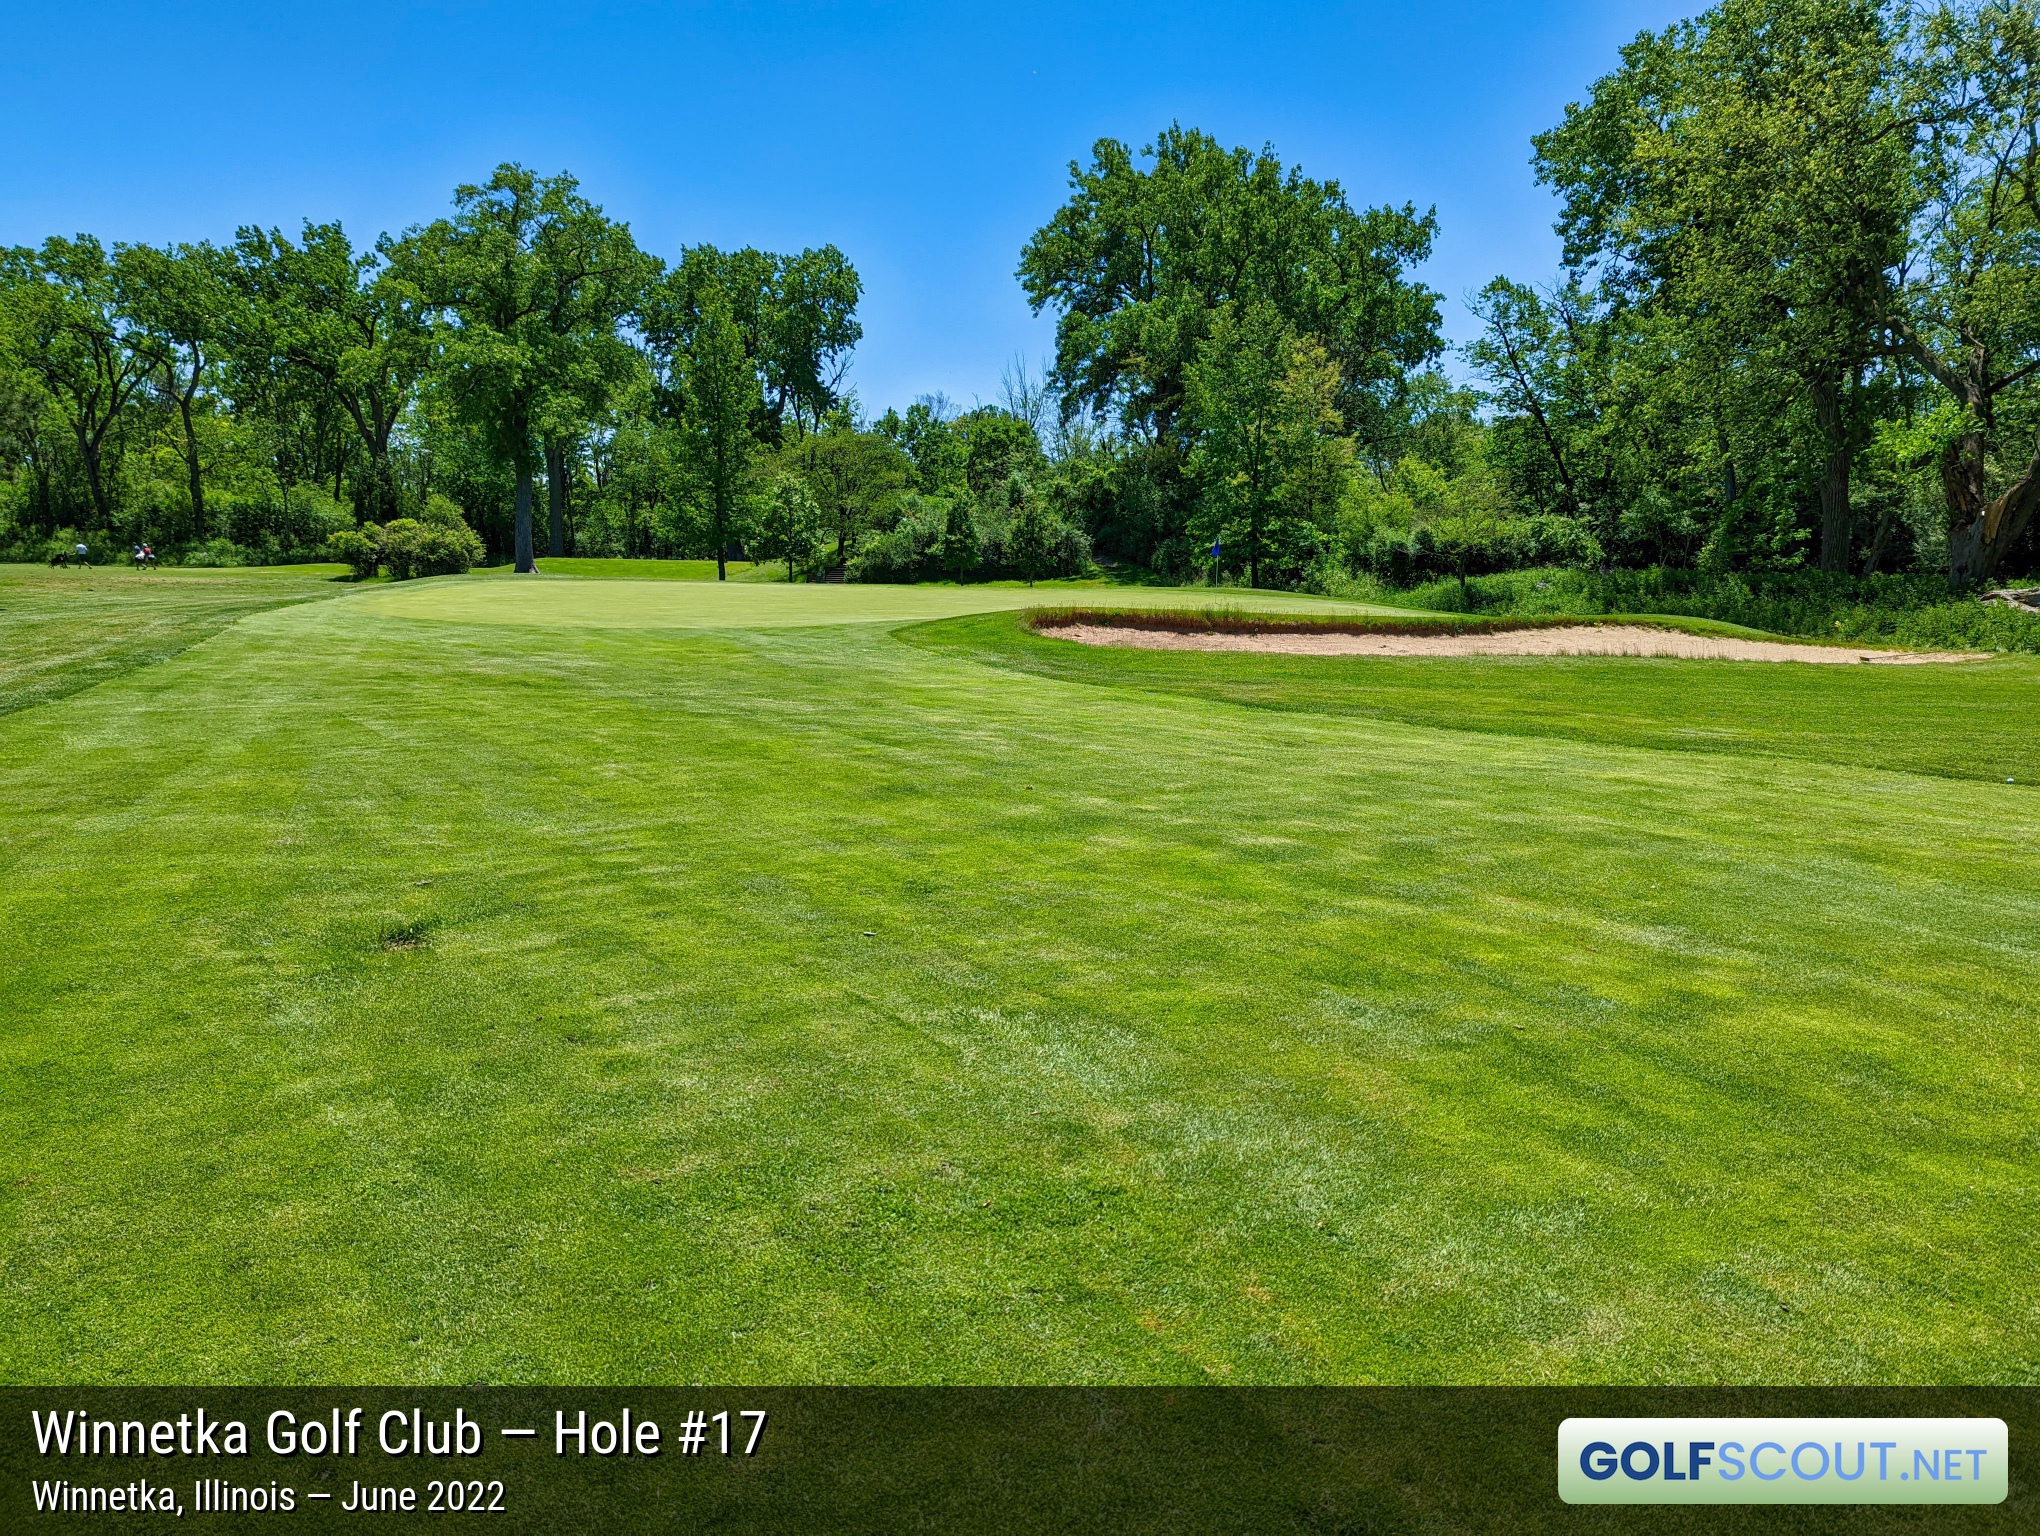 Photo of hole #17 at Winnetka Golf Club in Winnetka, Illinois. 